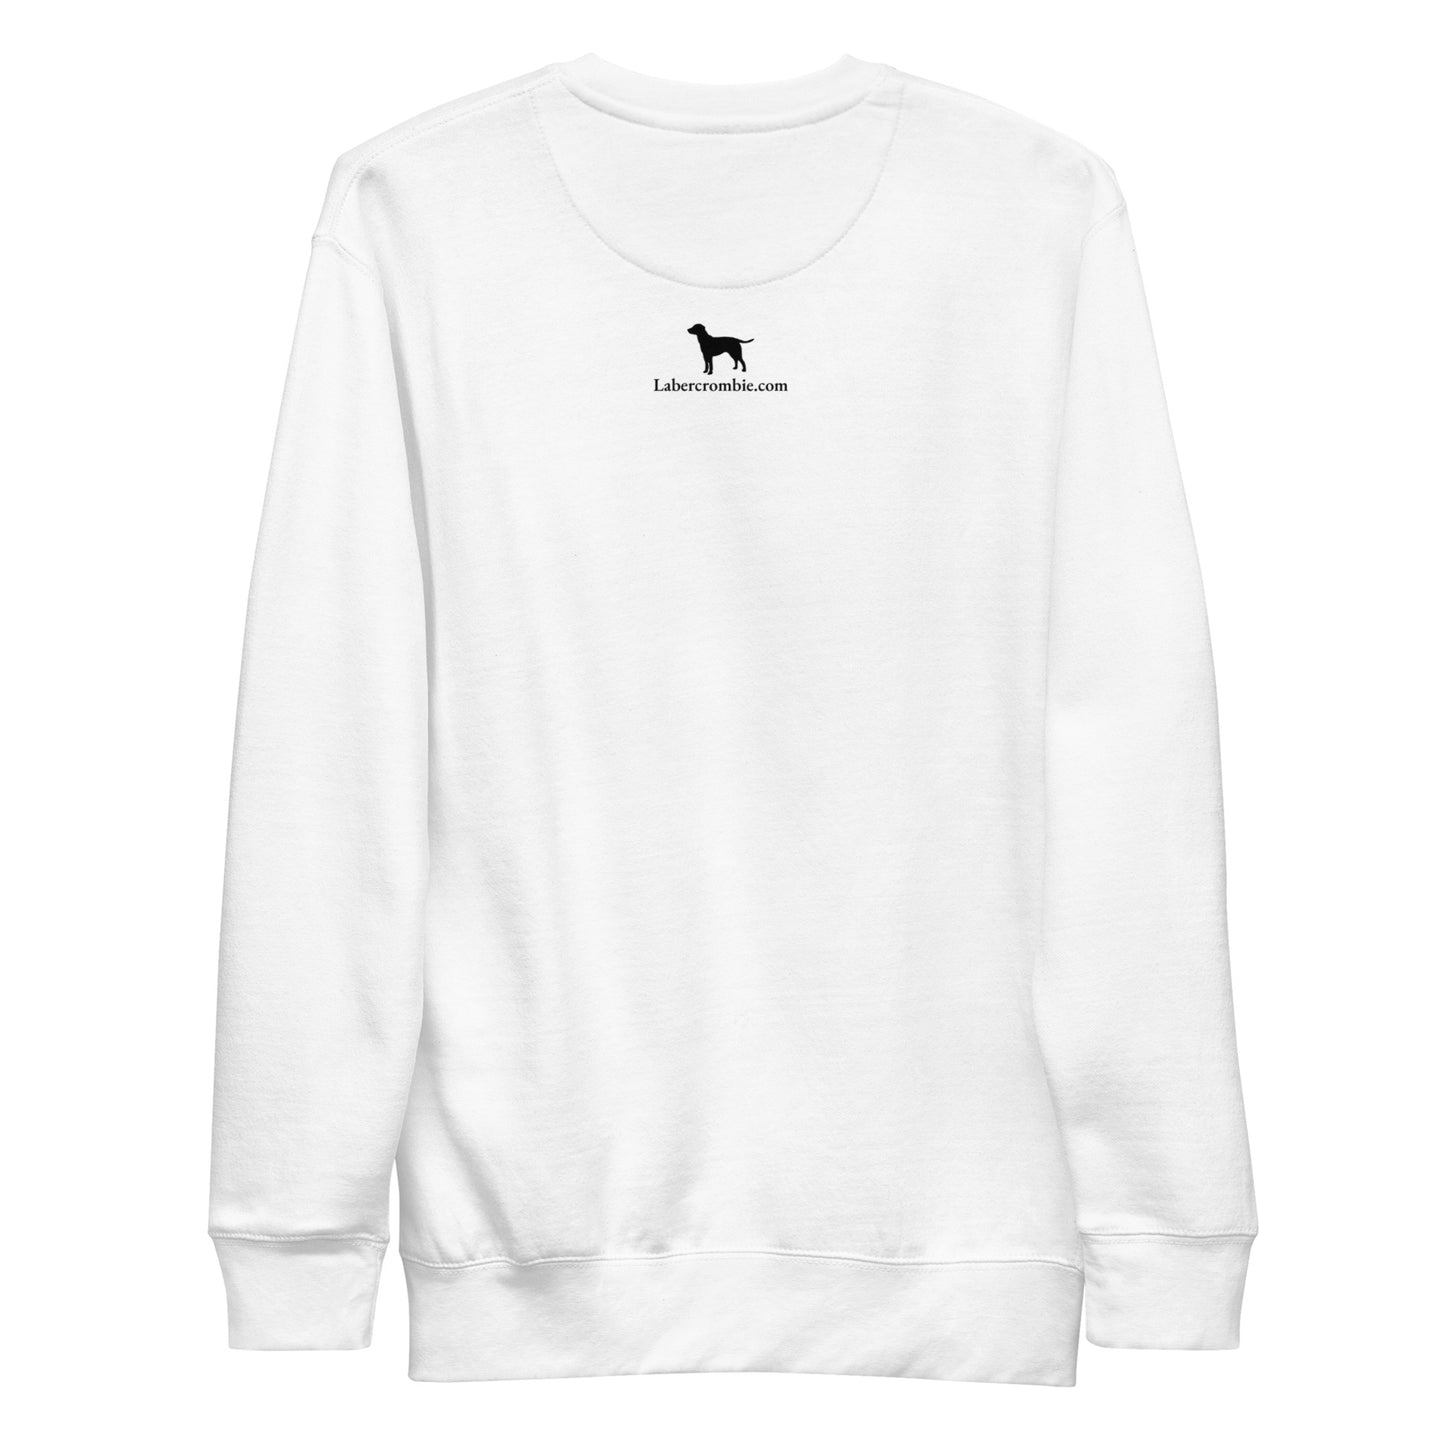 Have a Nice Dog Unisex Premium Sweatshirt